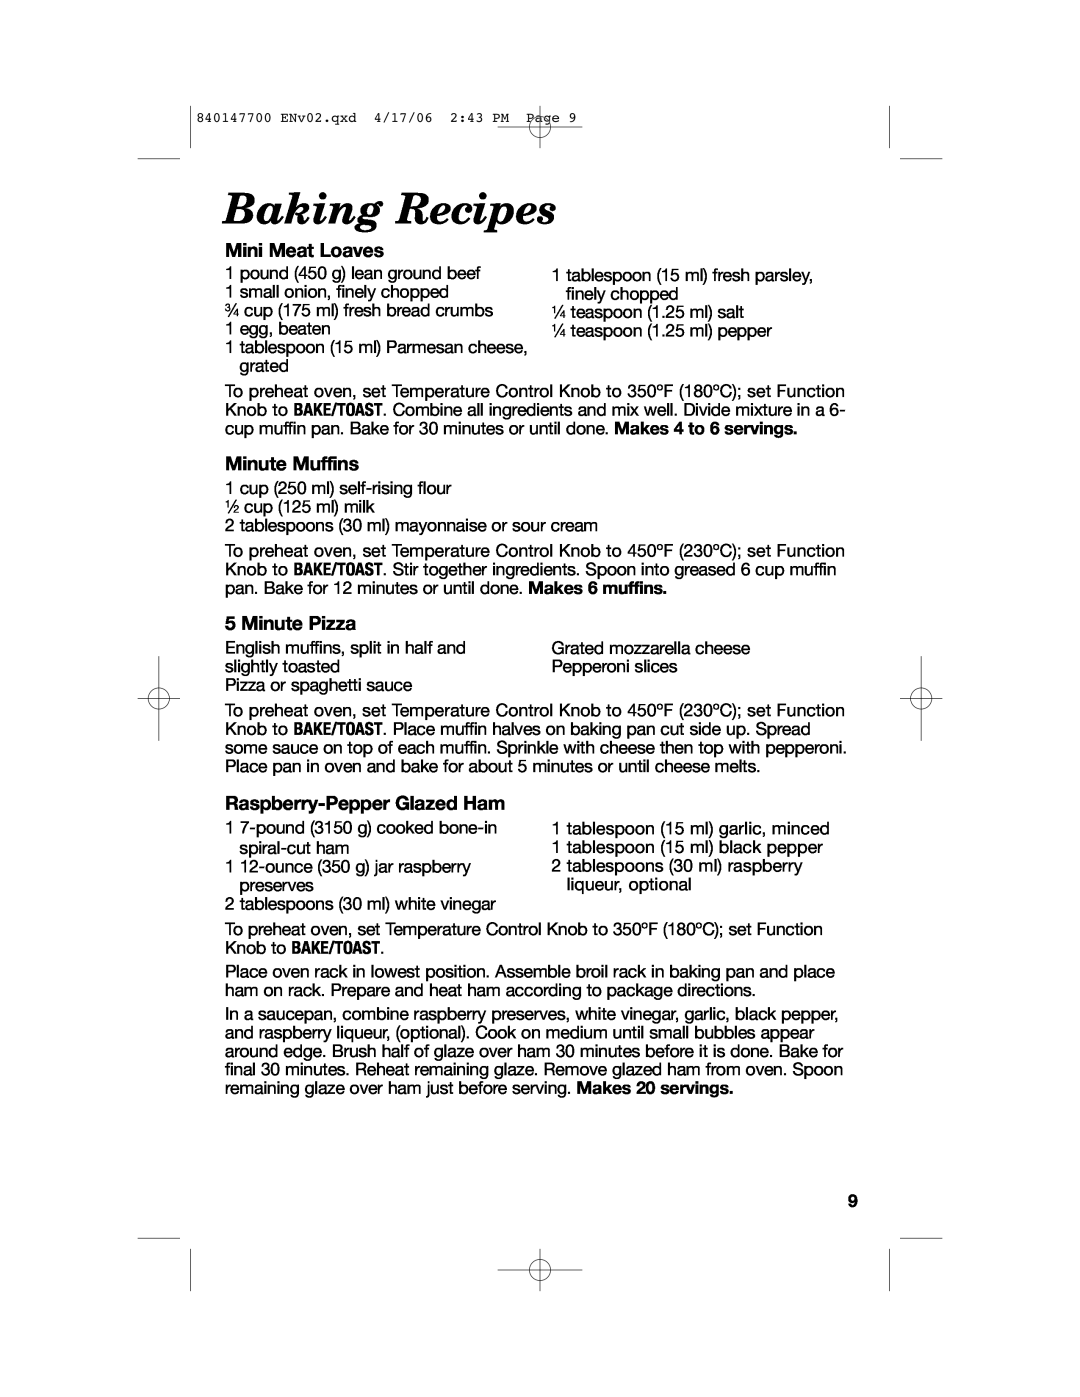 Hamilton Beach 31180 manual Mini Meat Loaves, Minute Muffins, Minute Pizza, Raspberry-PepperGlazed Ham, Baking Recipes 